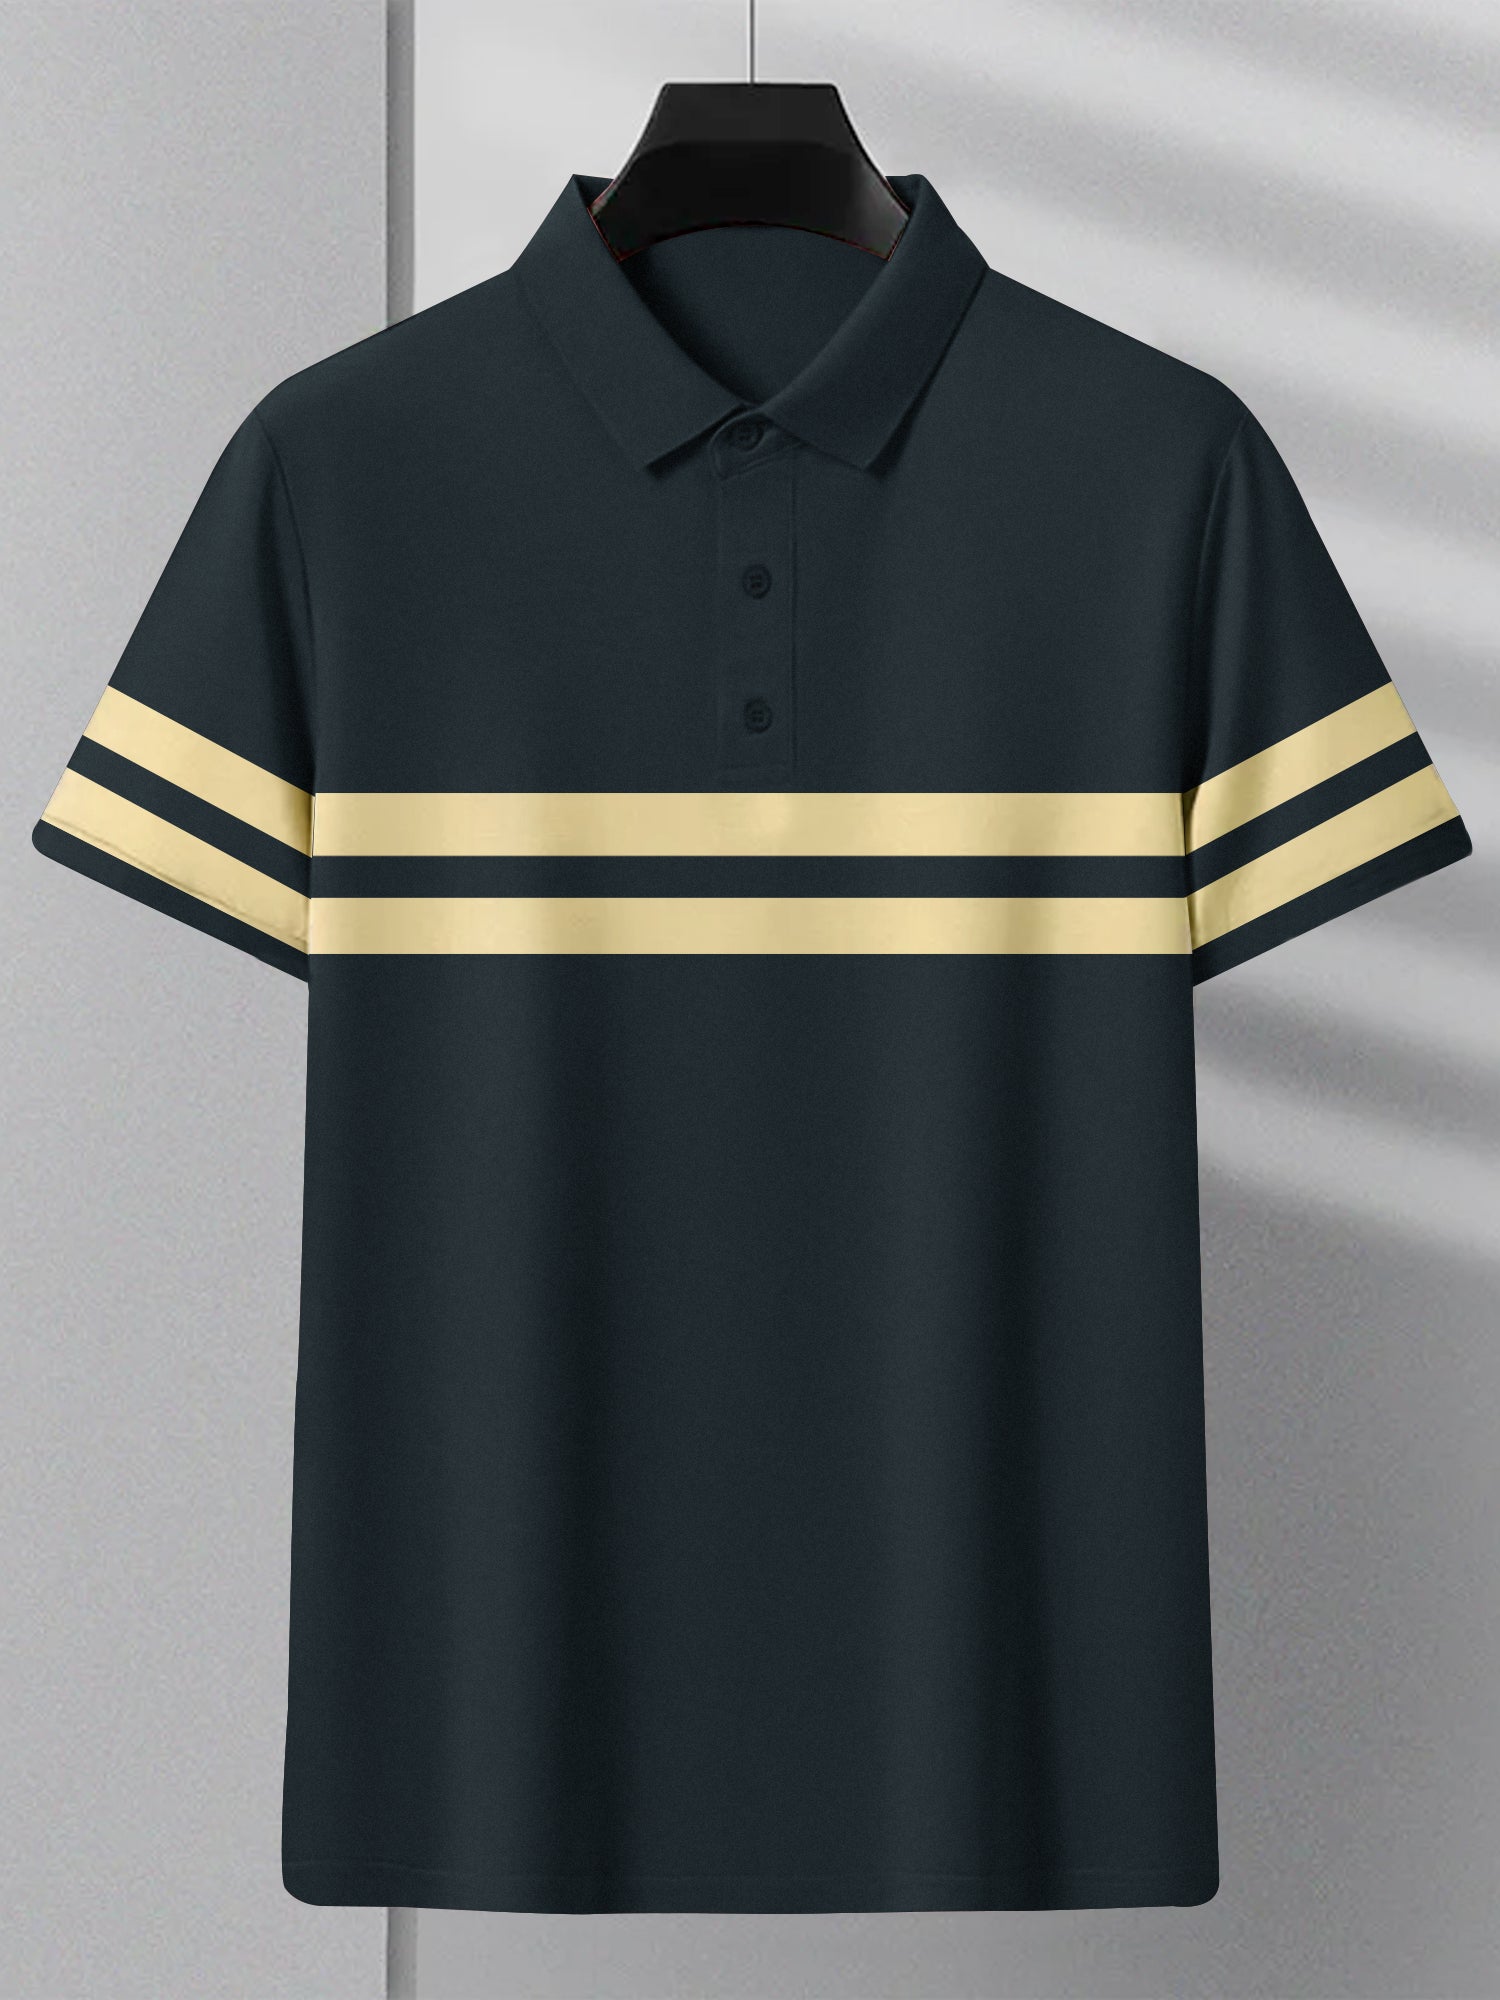 NXT Summer Polo Shirt For Men-Dark Navy With Light Yellow Strip-SP1442/RT2330